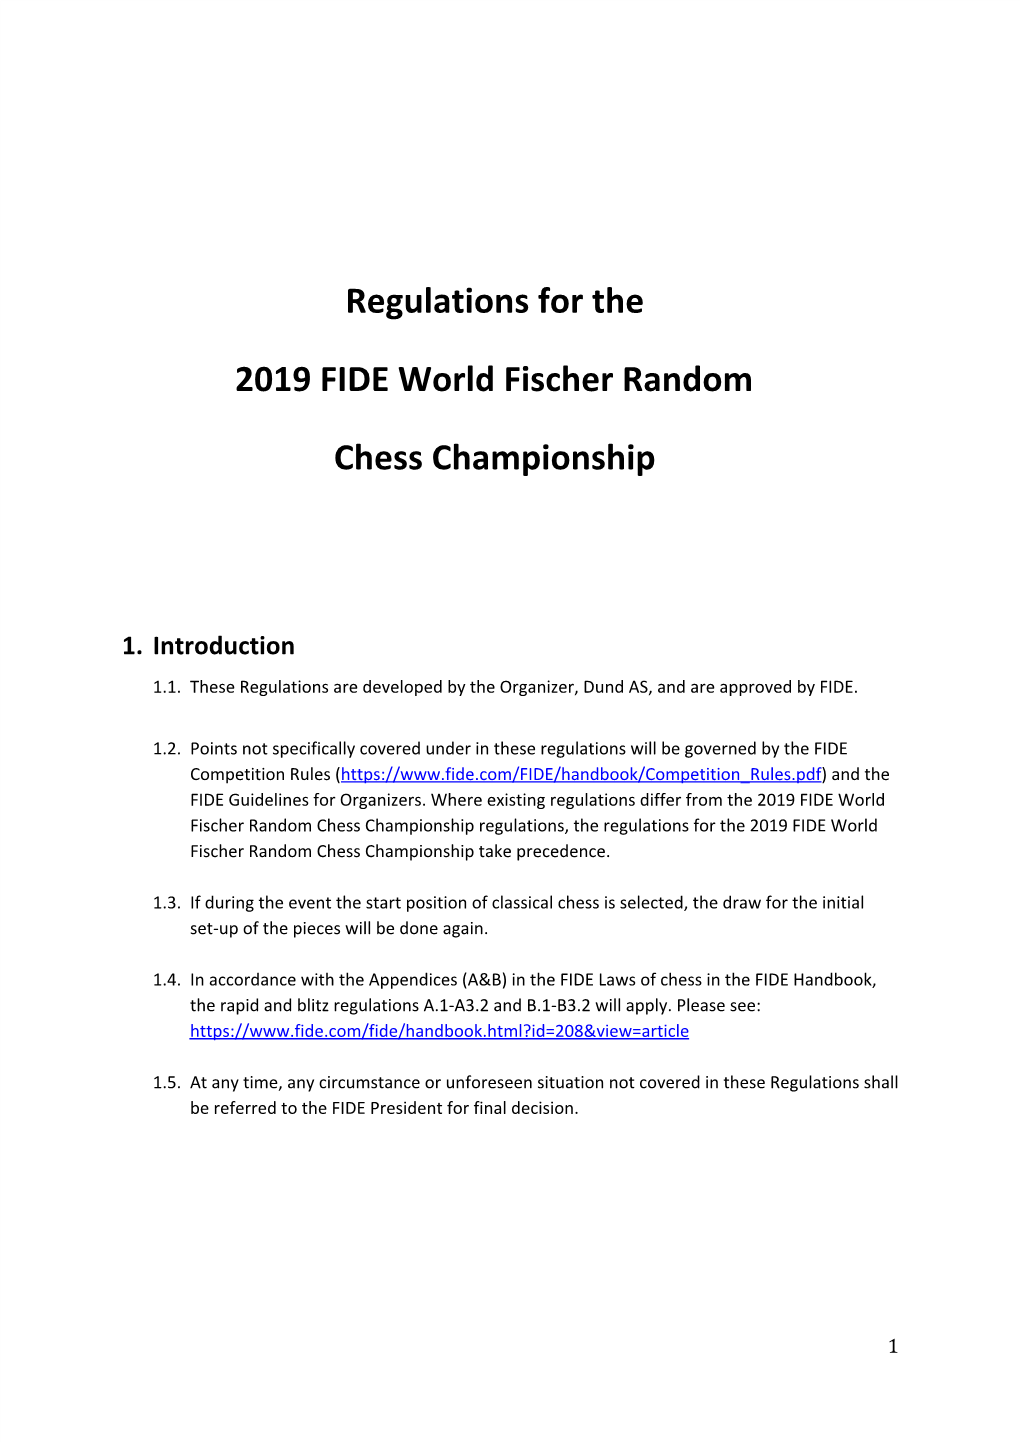 Regulations for the 2019 FIDE World Fischer Random Chess Championship Take Precedence